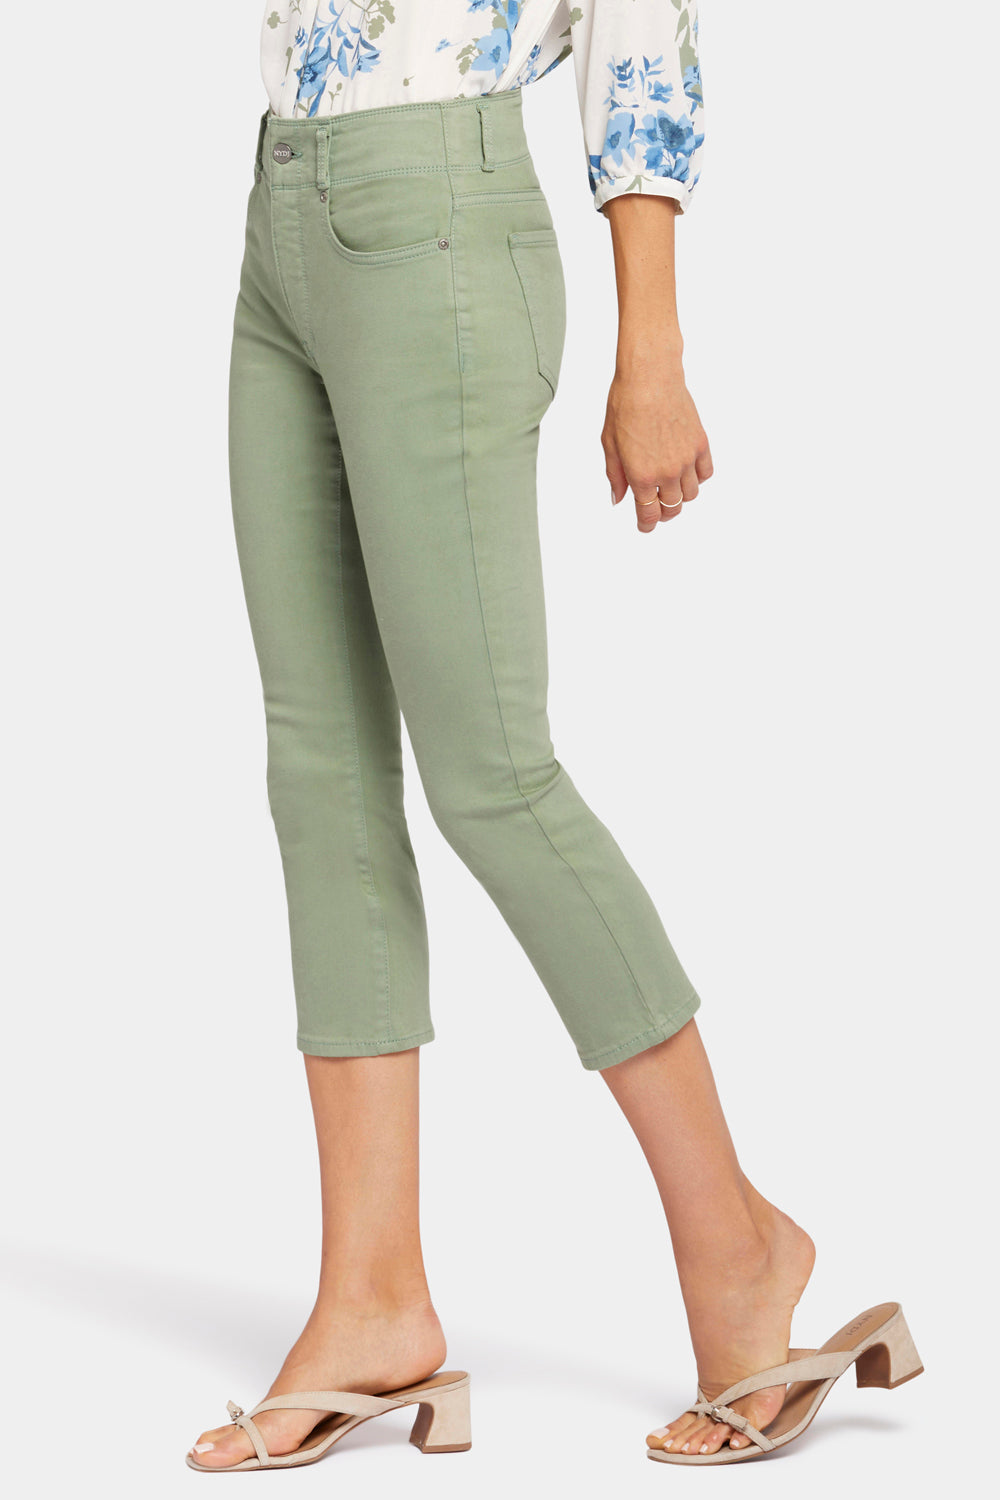 Ami Skinny Capri Jeans With High Rise - English Ivy Green | NYDJ